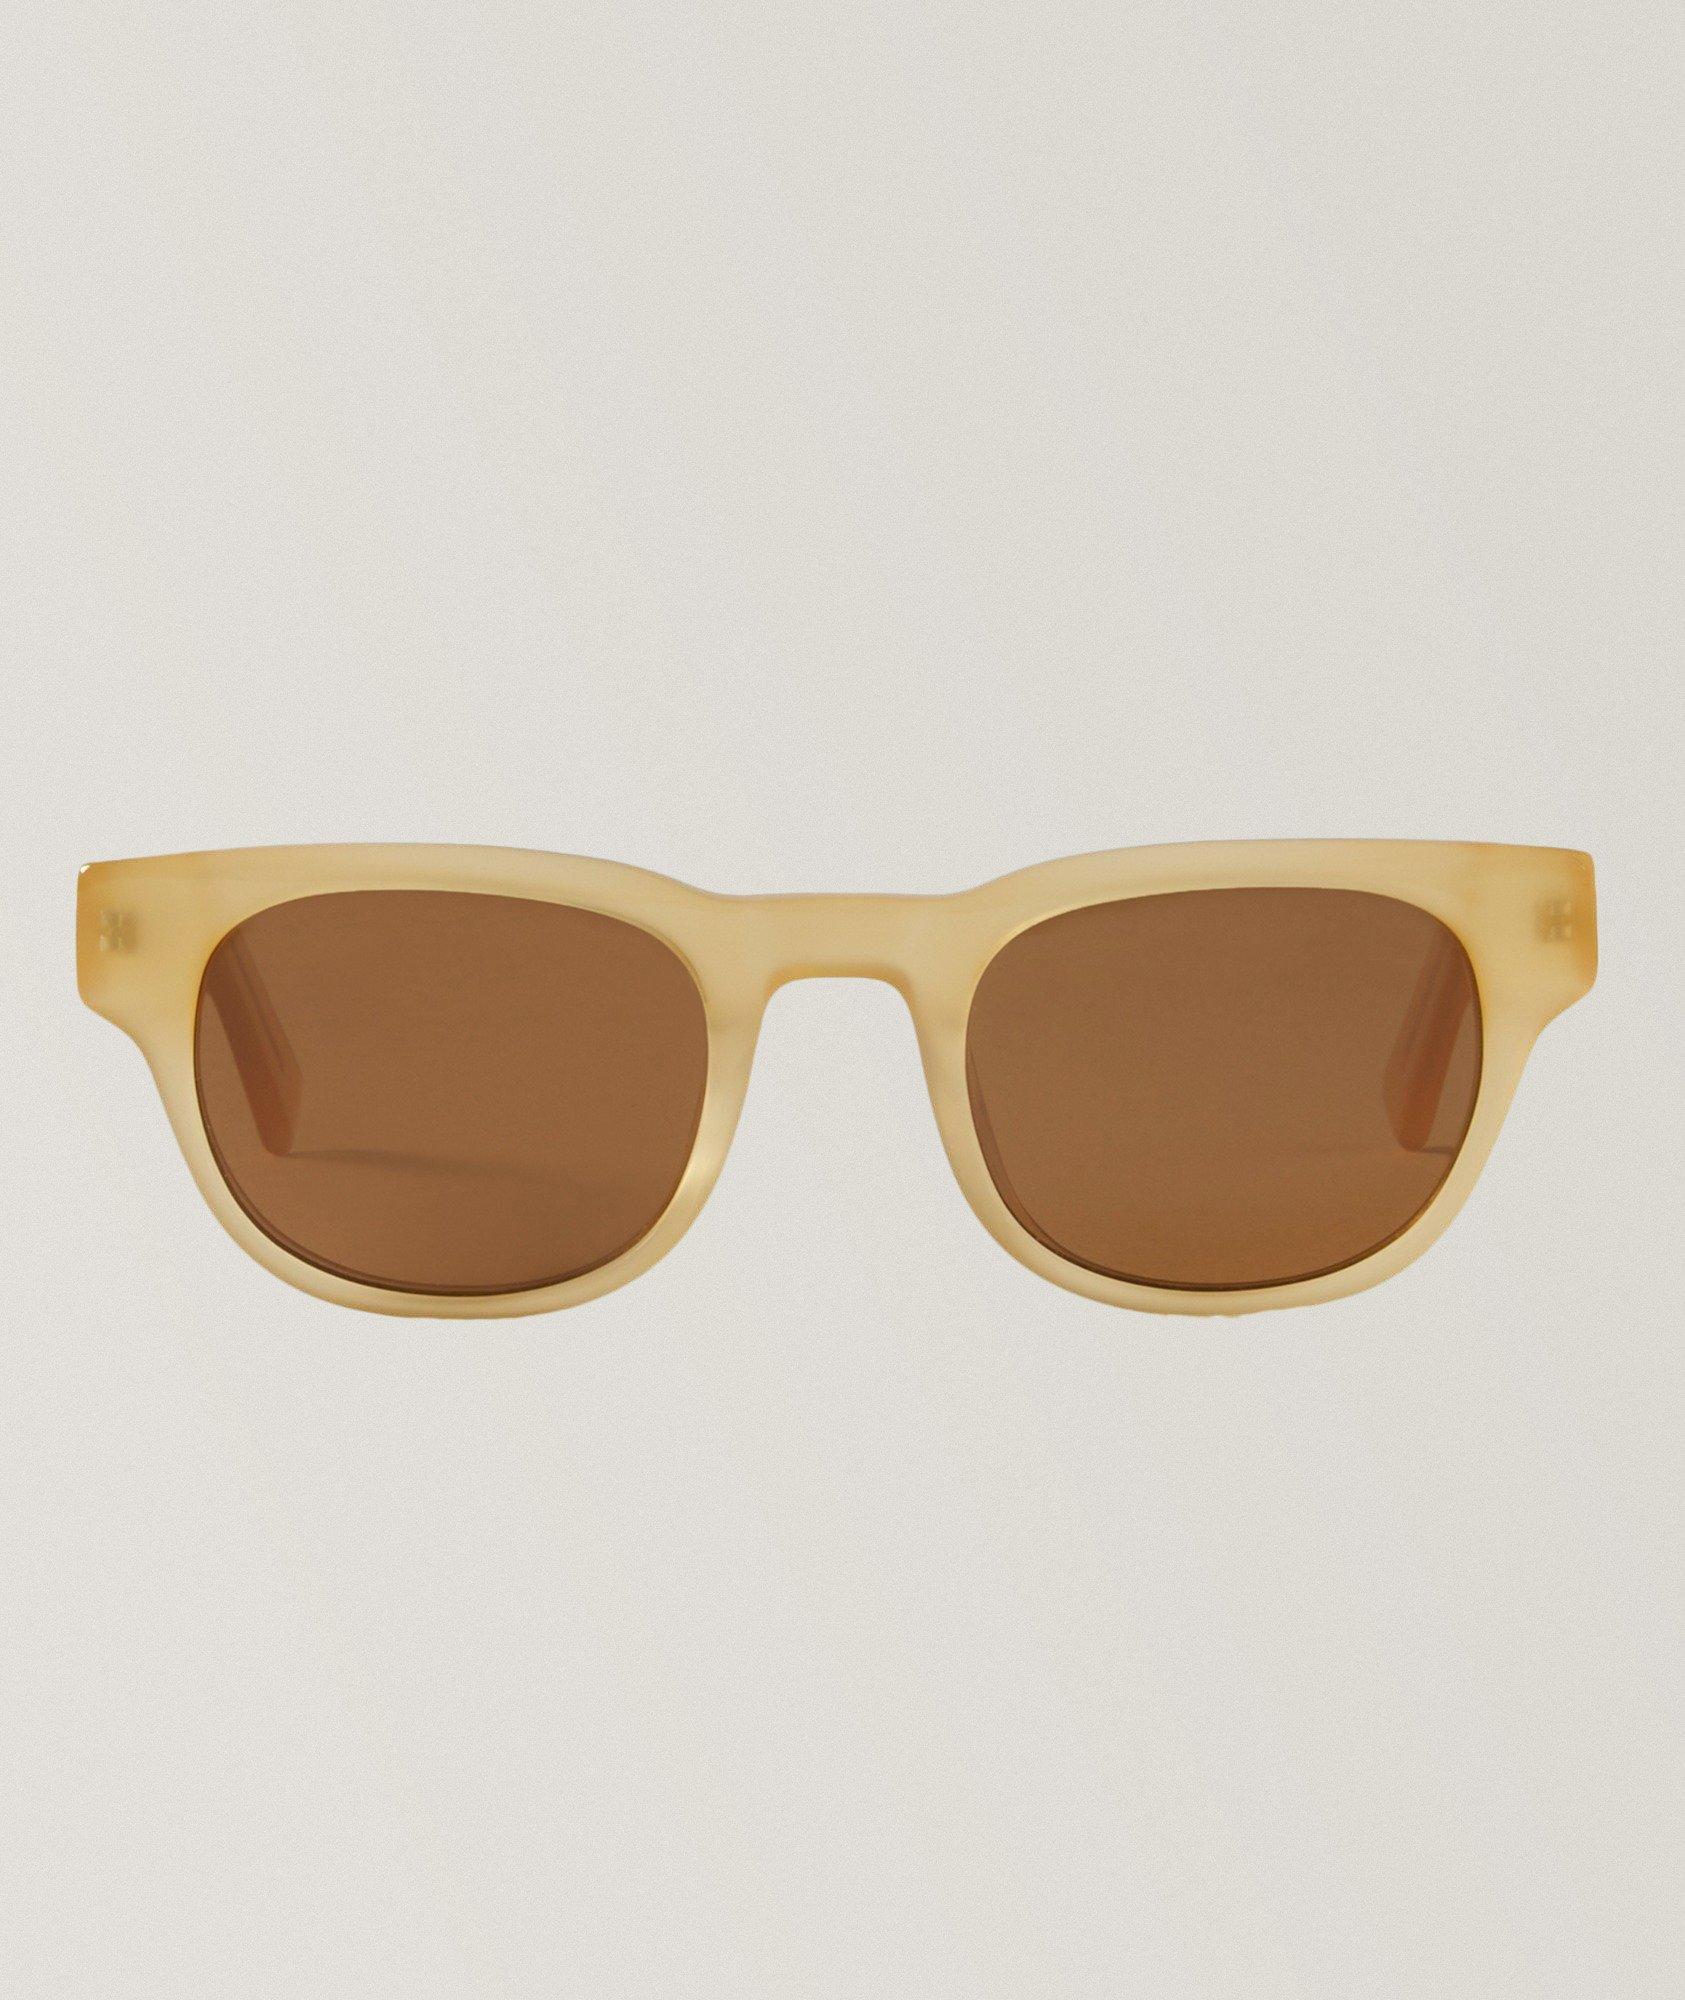 Francis Square Wayfarer Sunglasses image 1